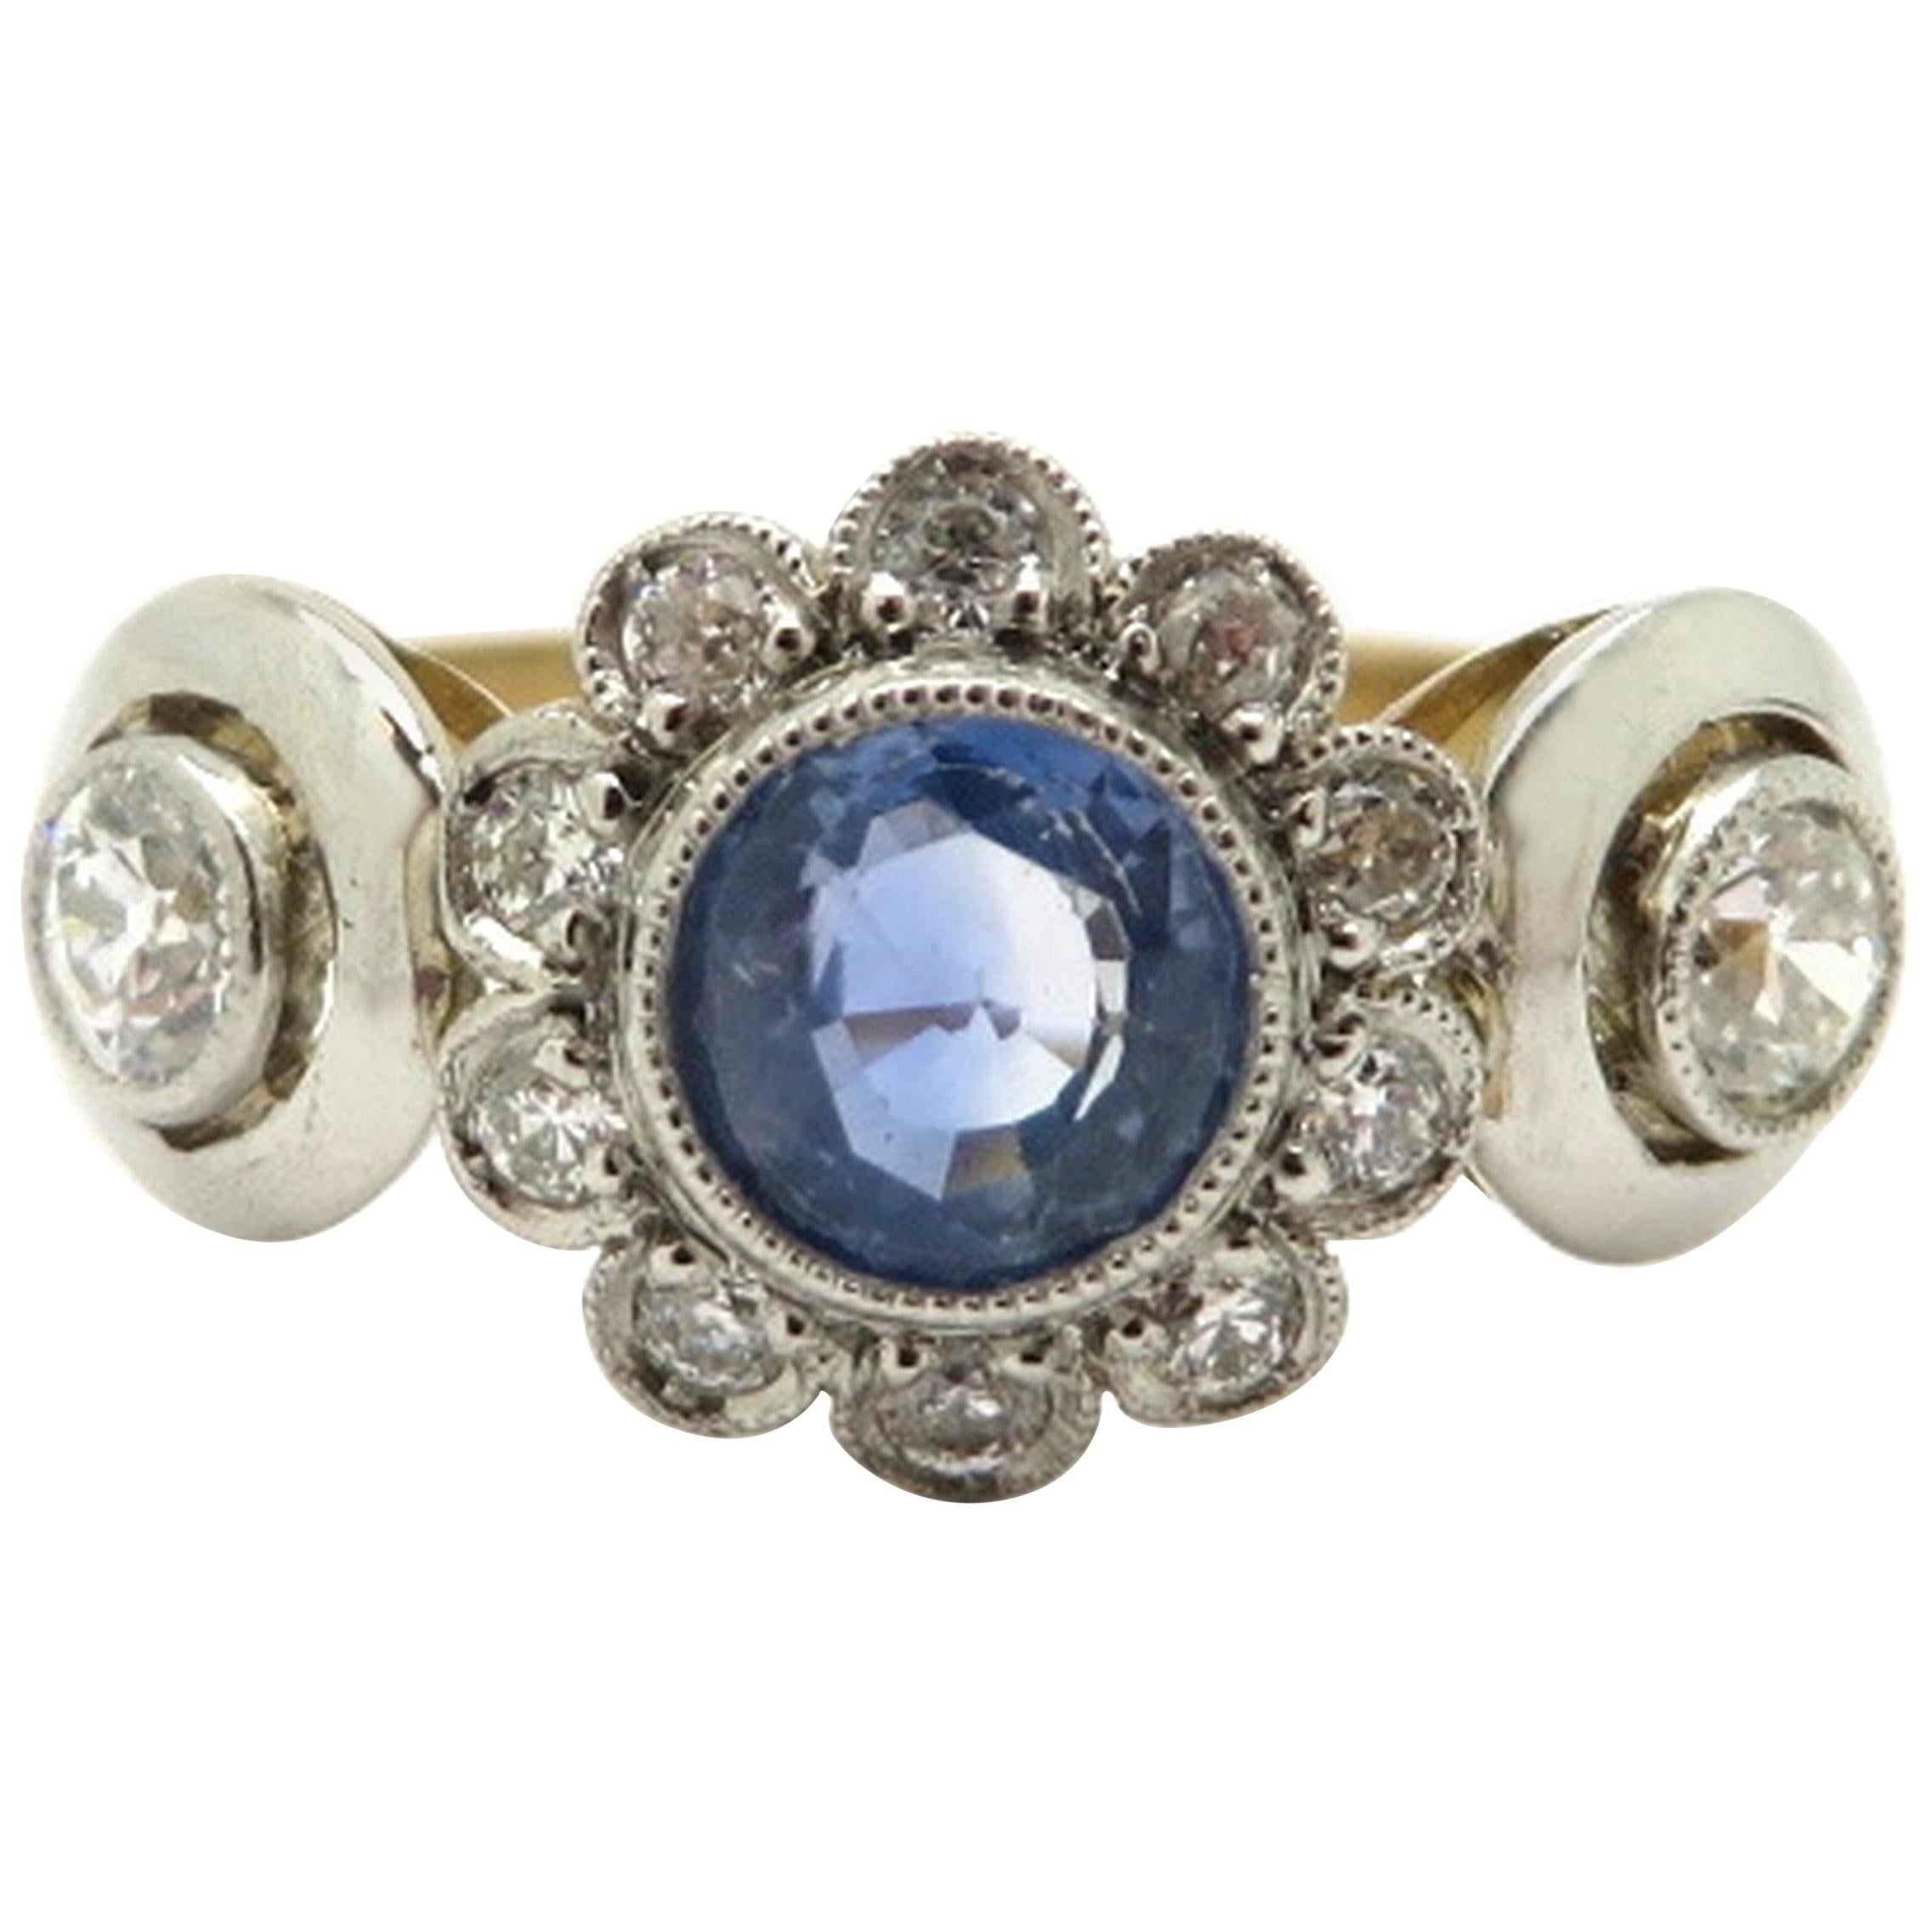 Art Deco Style Platinum and 18 Karat Two-Tone Flower Sapphire and Diamond Ring